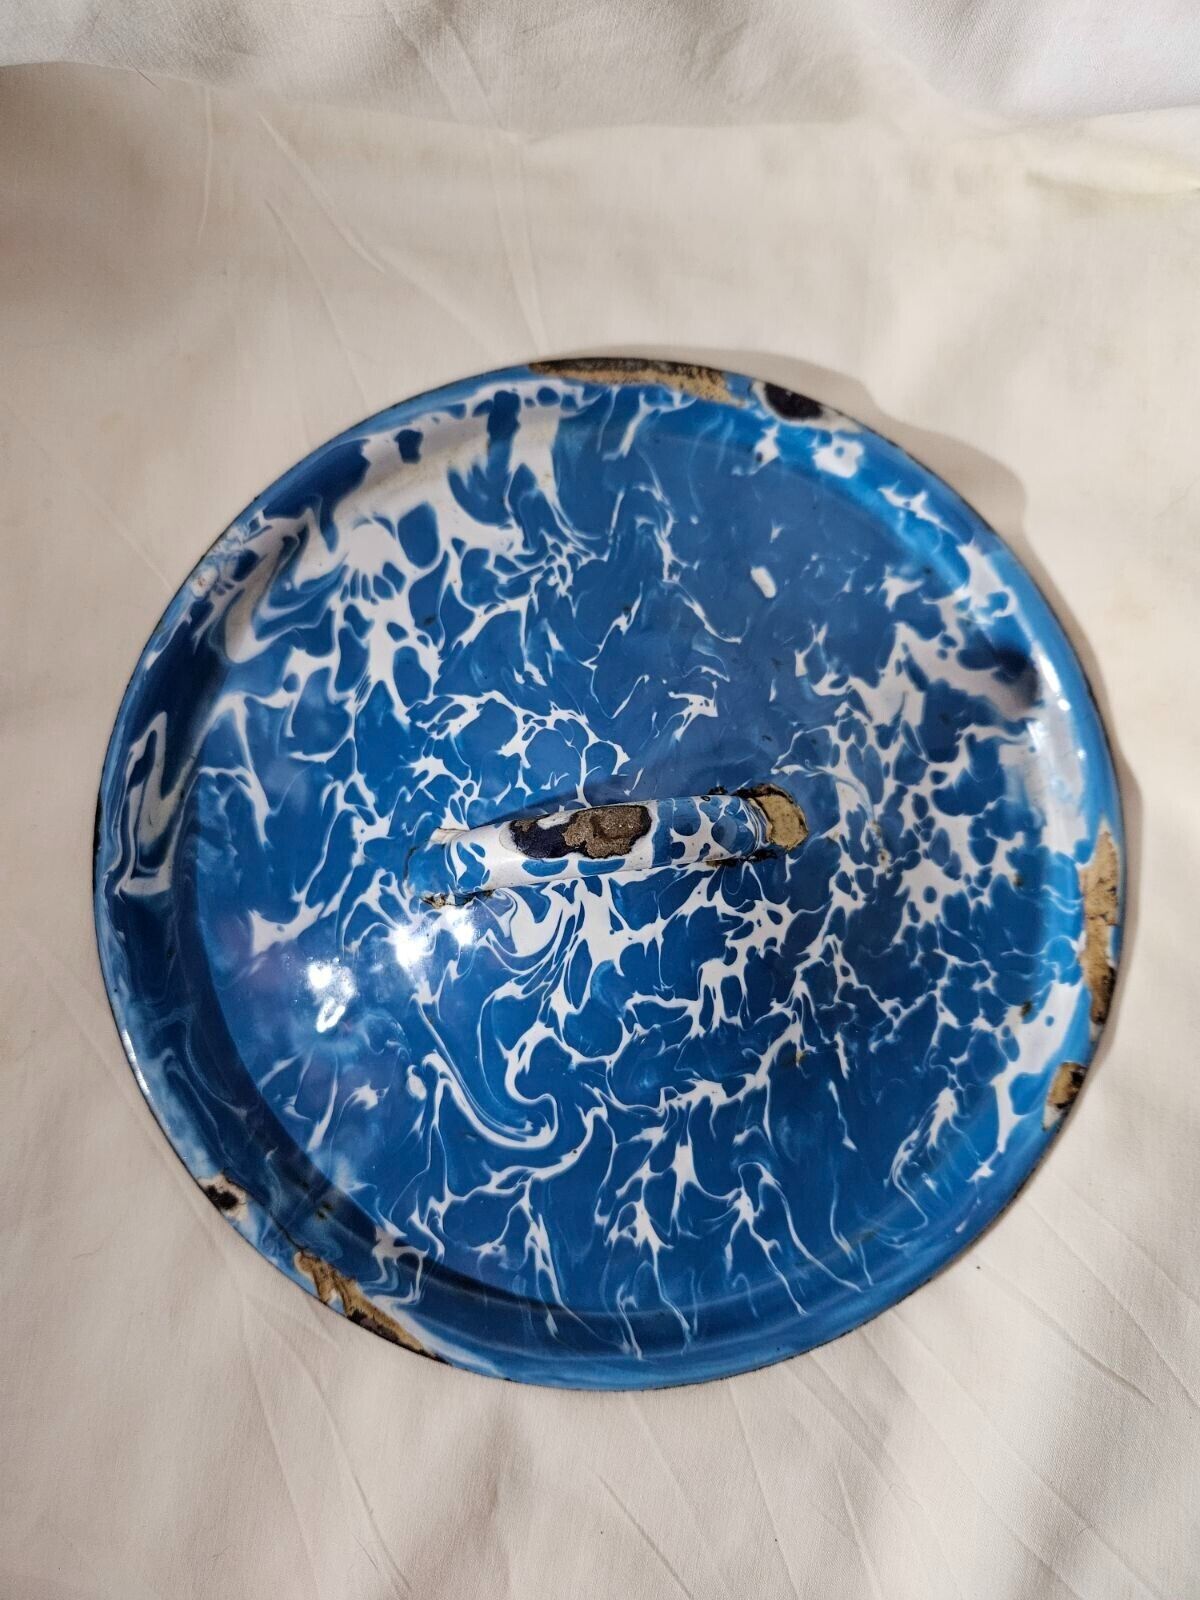 Vintage Blue & White Enamel Splatter Granite Ware REPLACEMENT LID 7.25